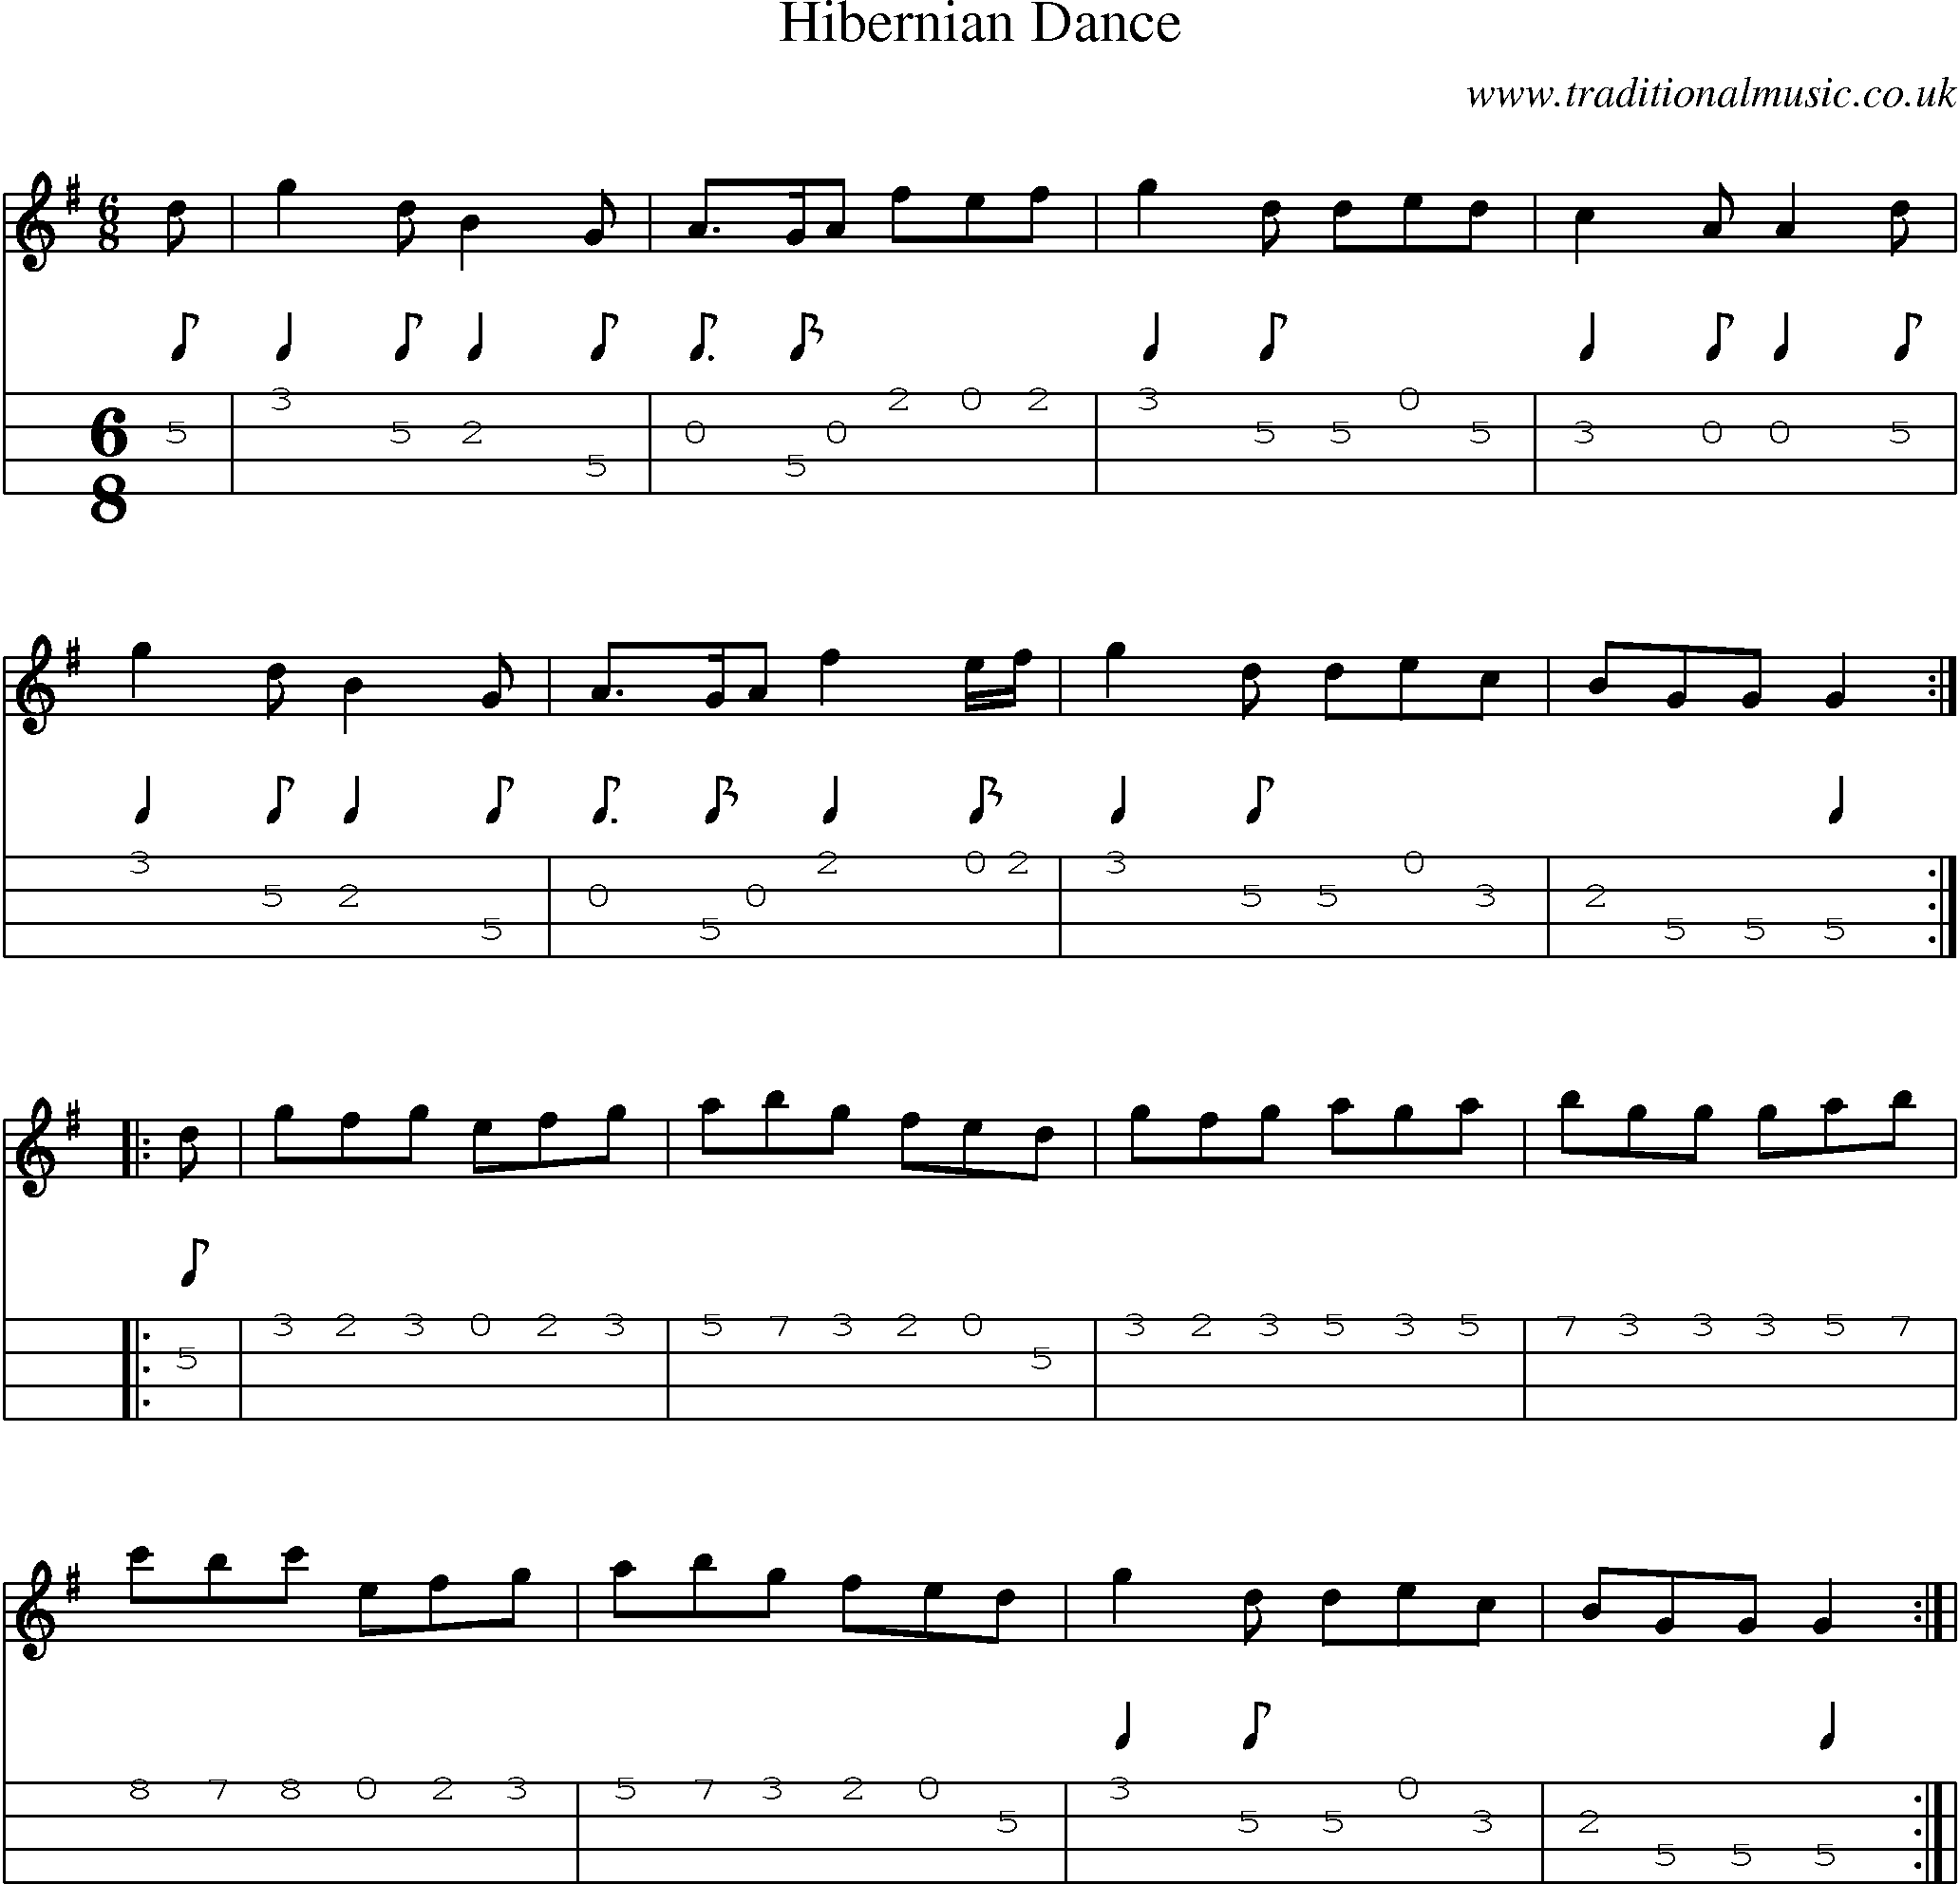 Music Score and Mandolin Tabs for Hibernian Dance